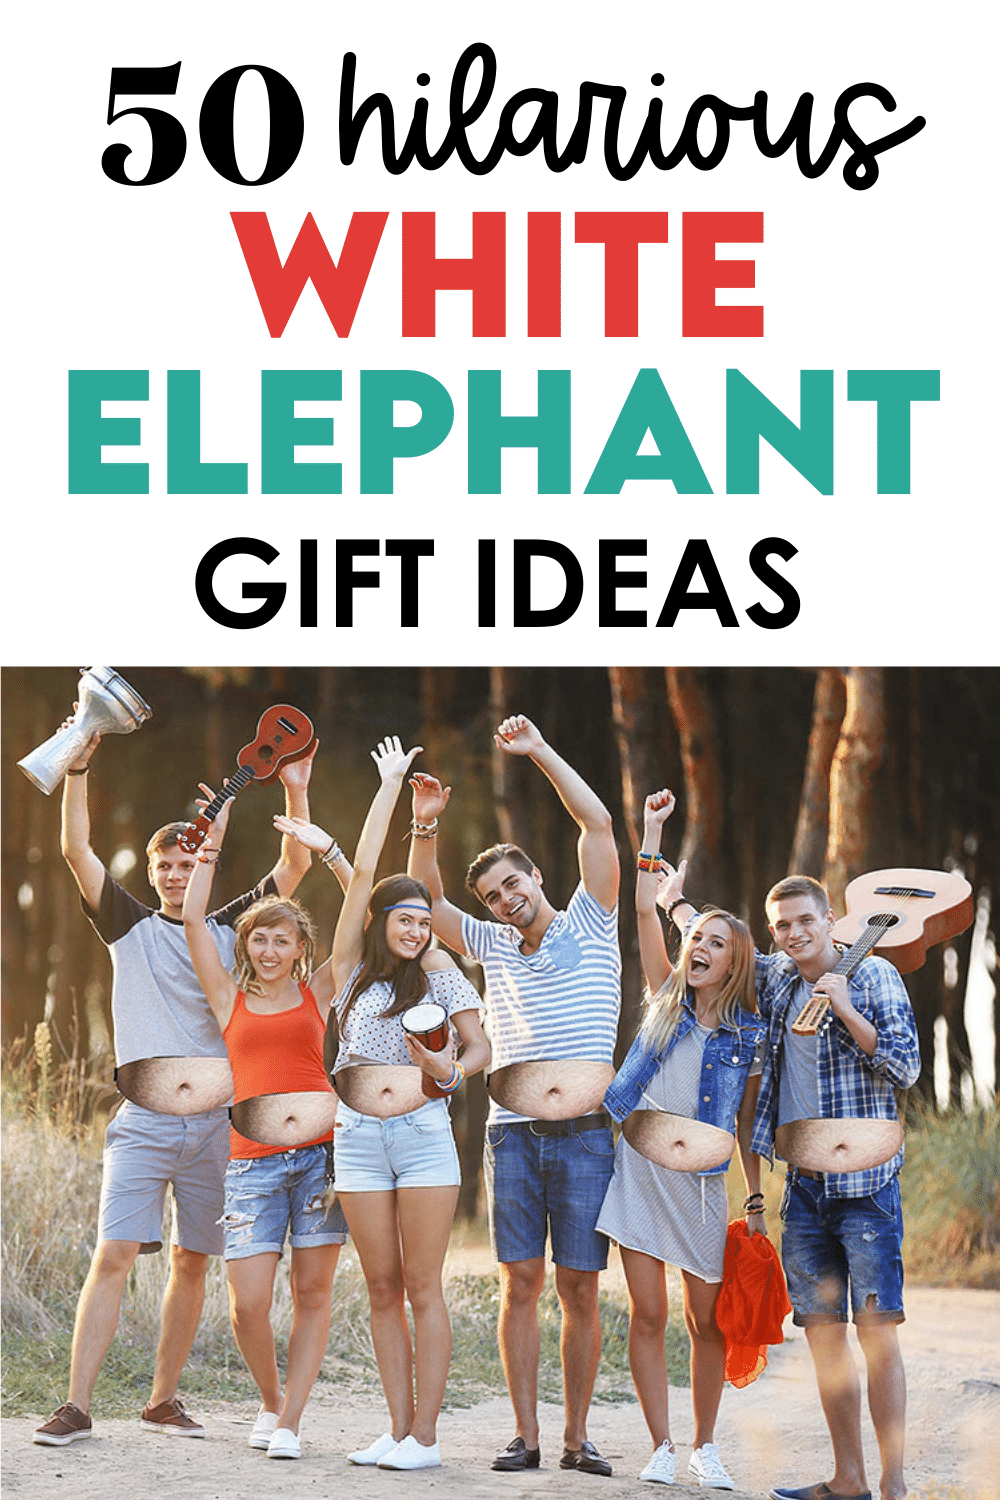 Funny White Elephant Gift Hilarious Party Game Jokes On You Game Night